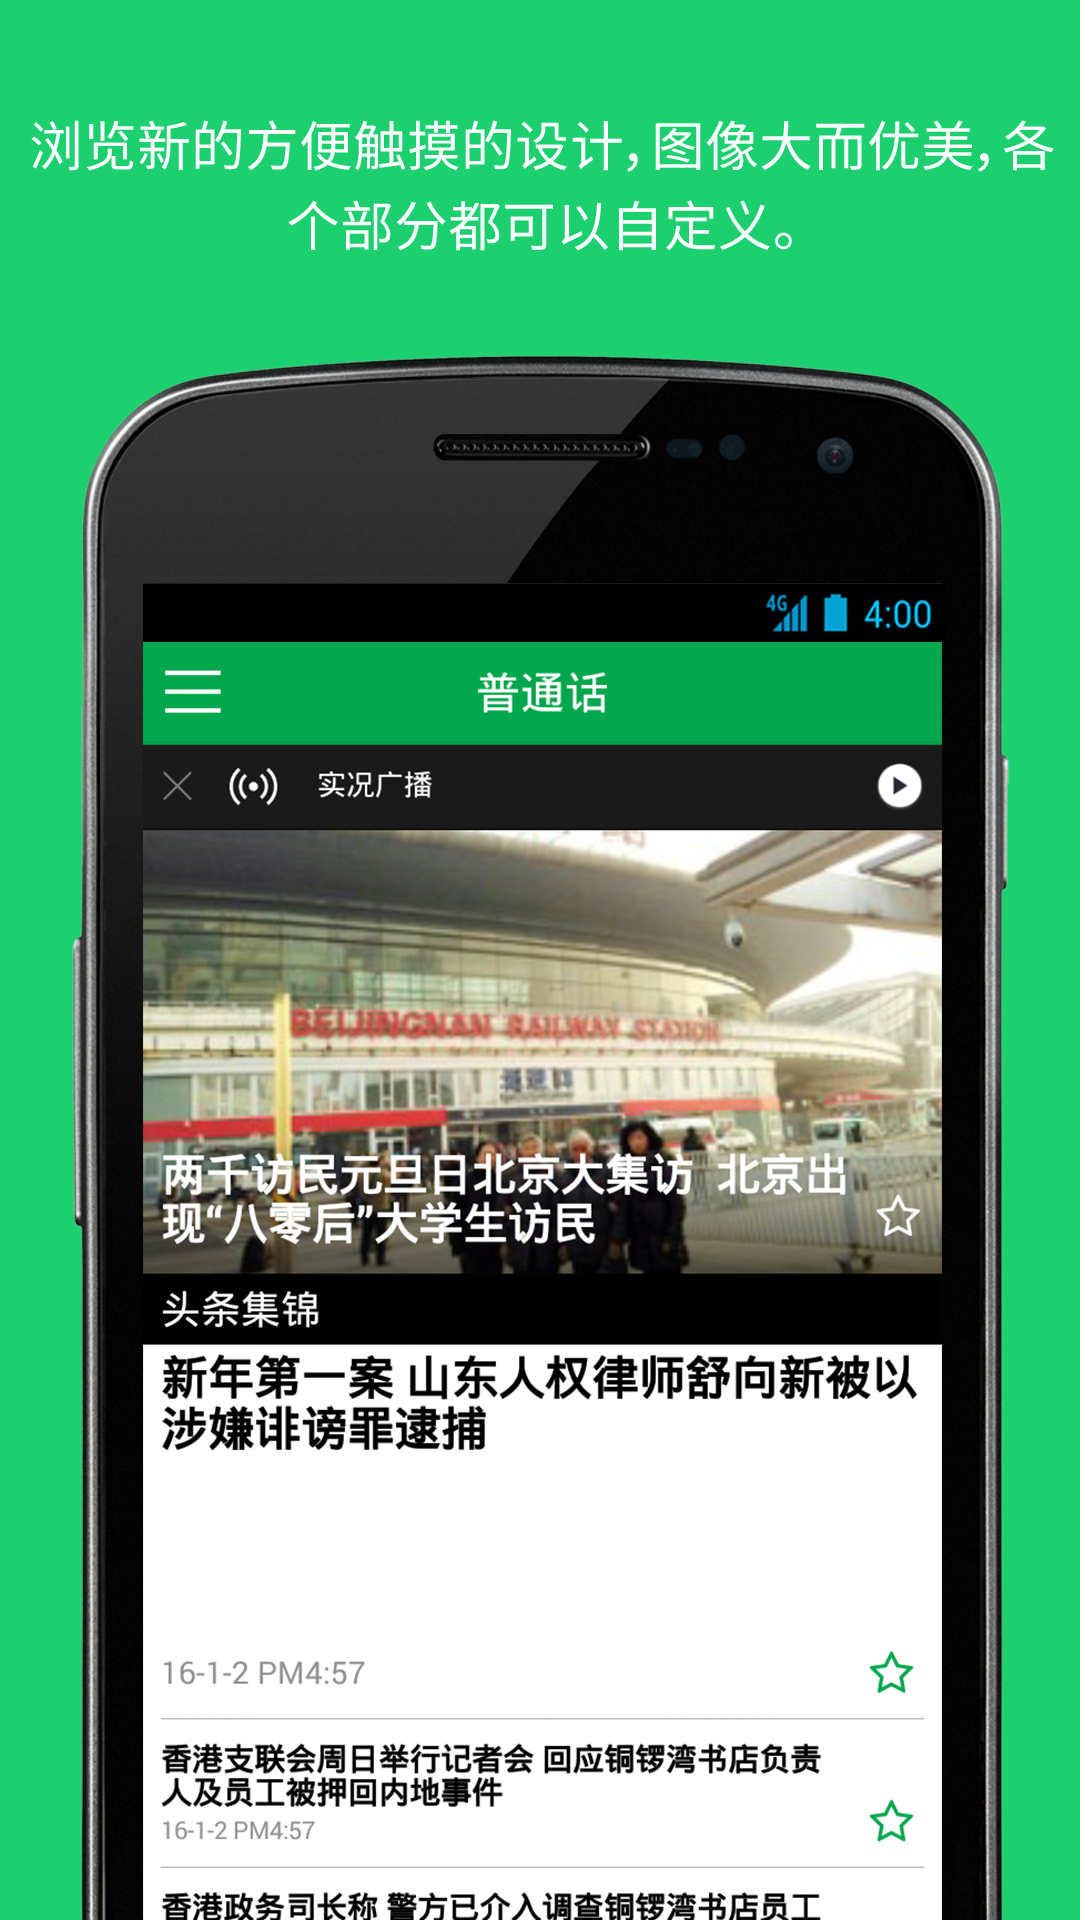 Android application Radio Free Asia (RFA) screenshort